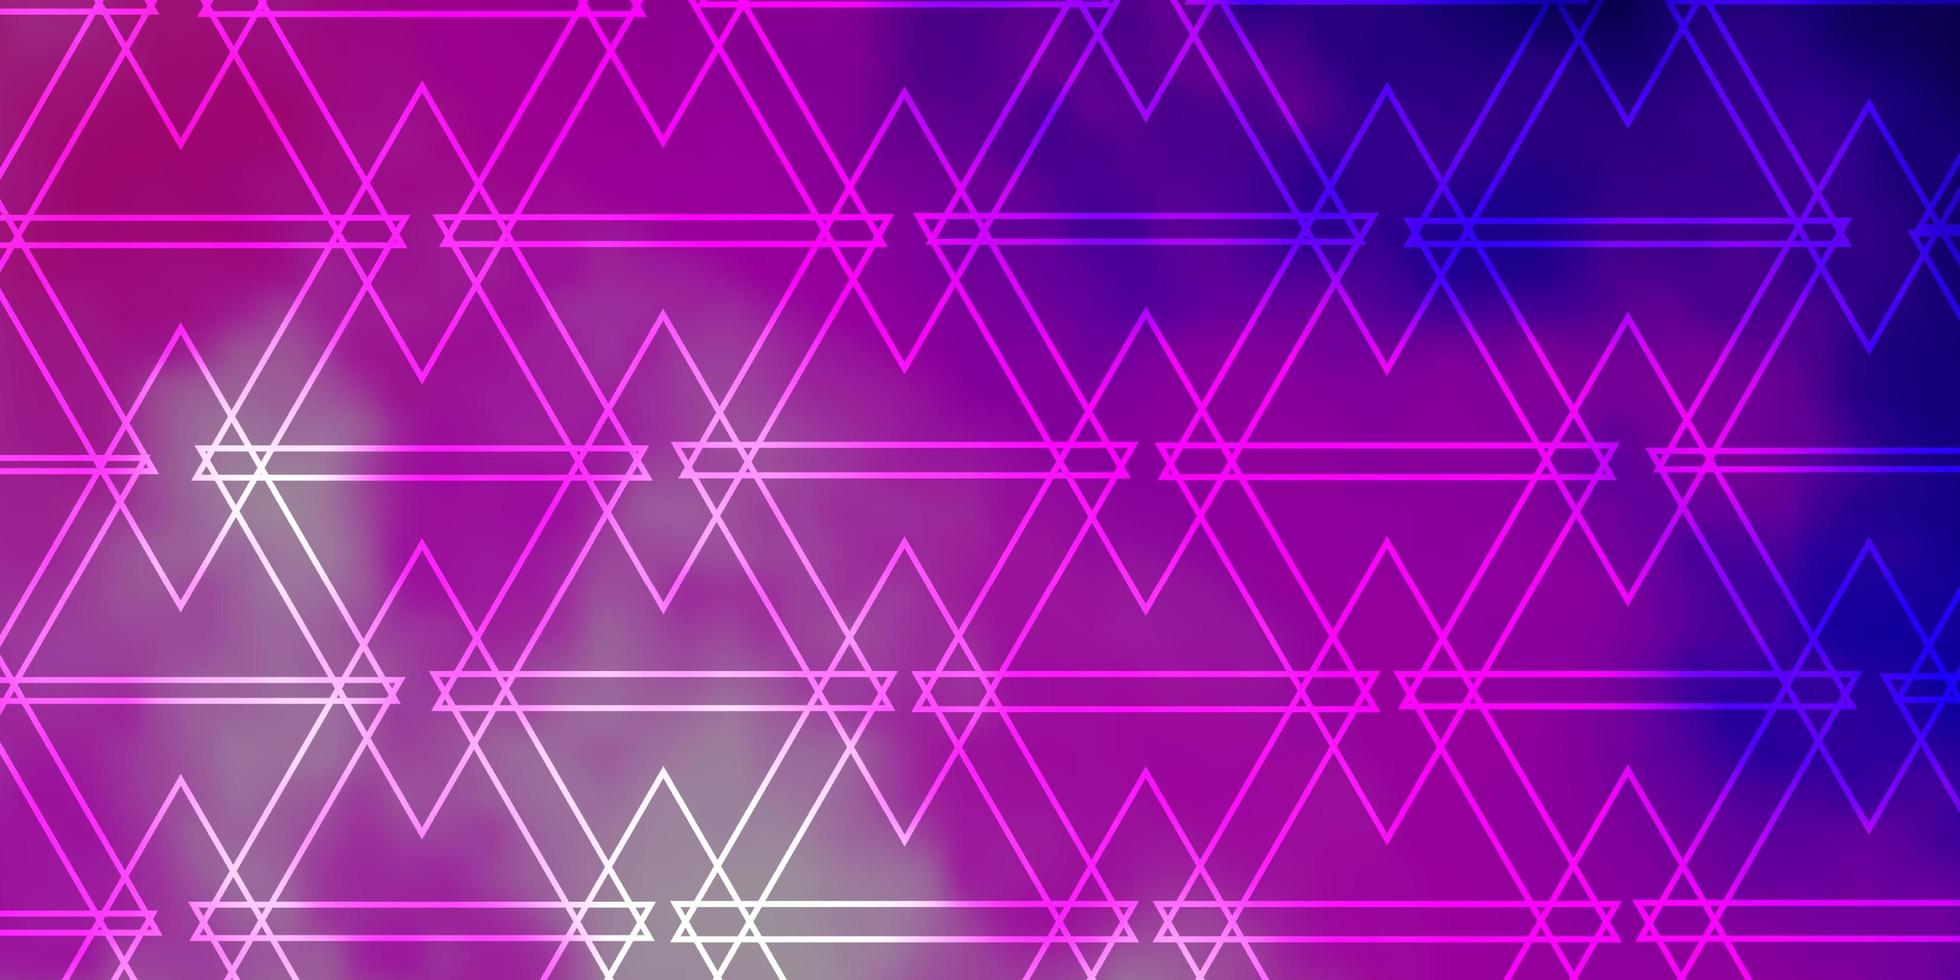 ljuslila, rosa vektorlayout med linjer, trianglar. vektor